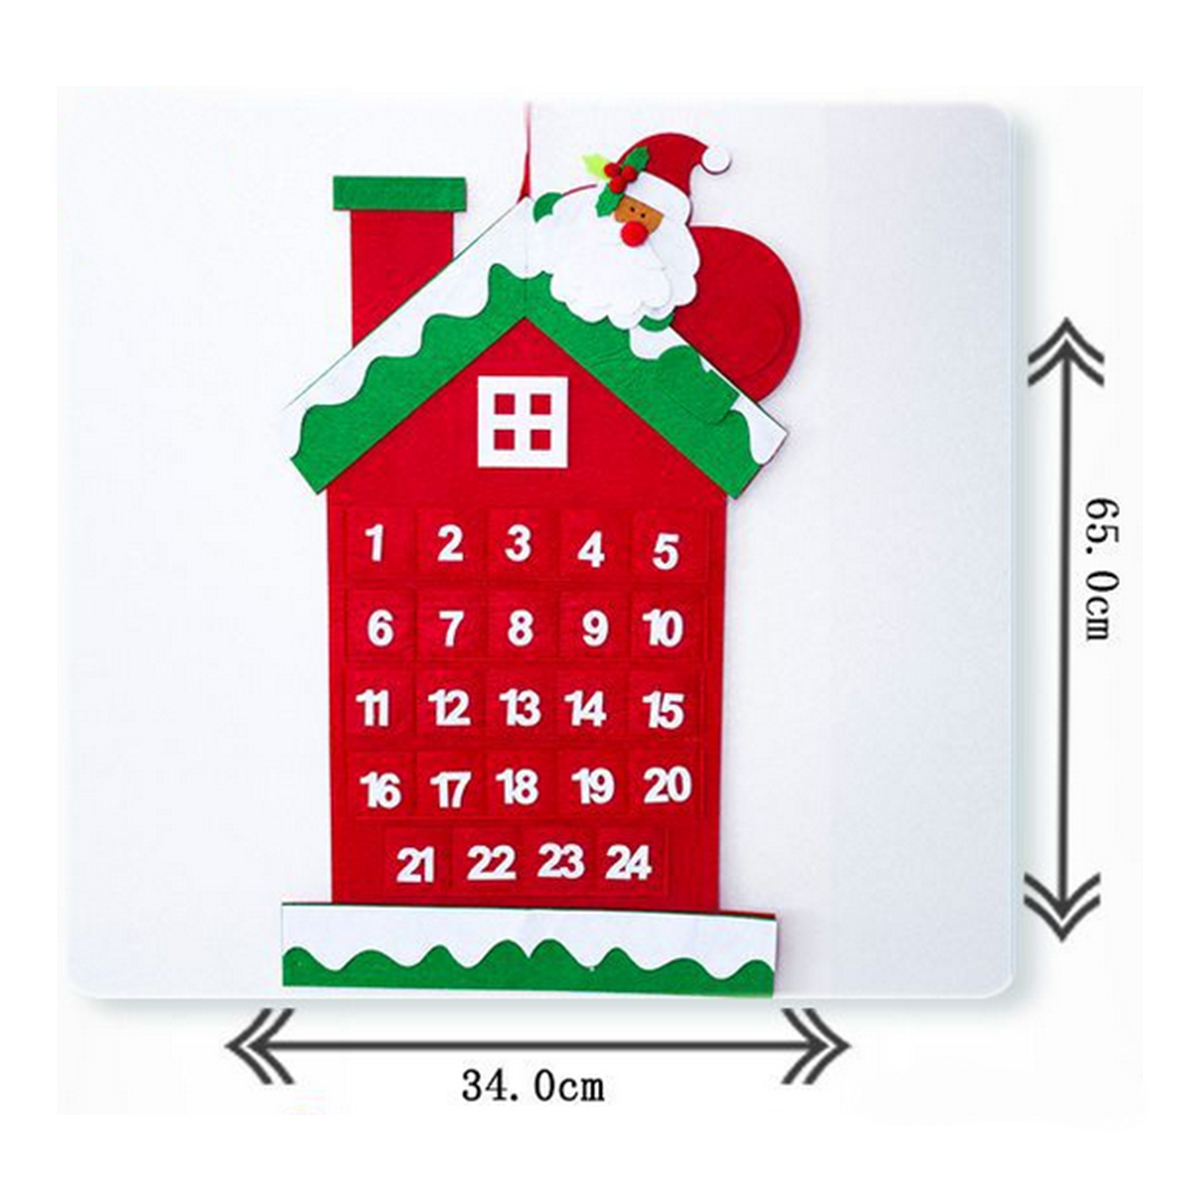 Christmas-Tree-Advent-Calendar-Felt-Fabric-Holiday-Countdown-Christmas-Display-Decor-1370488-9